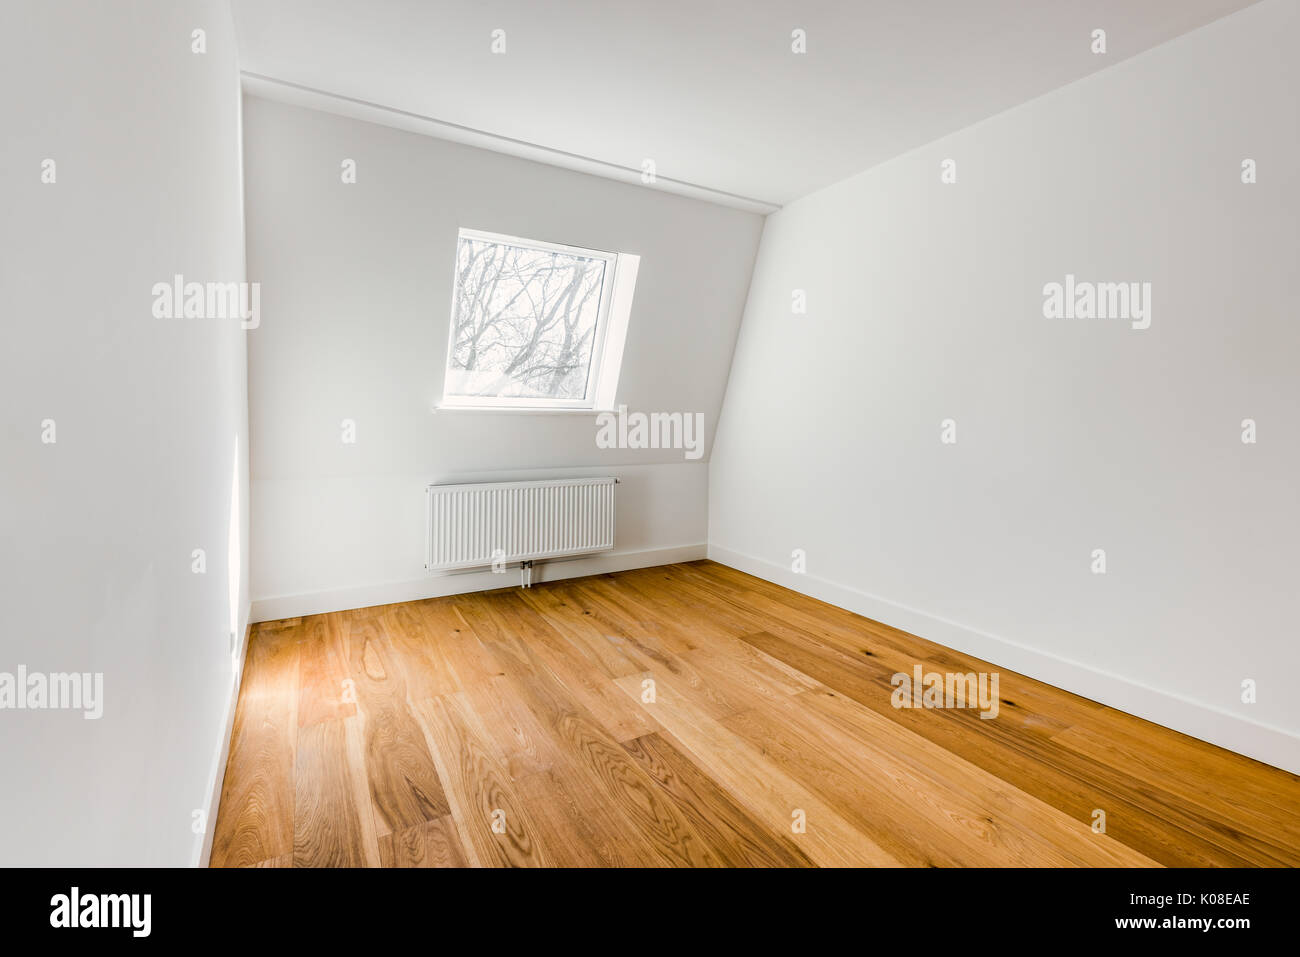 Empty Domestic Room with Hardwood Floor, Radiator and Window Stock Photo